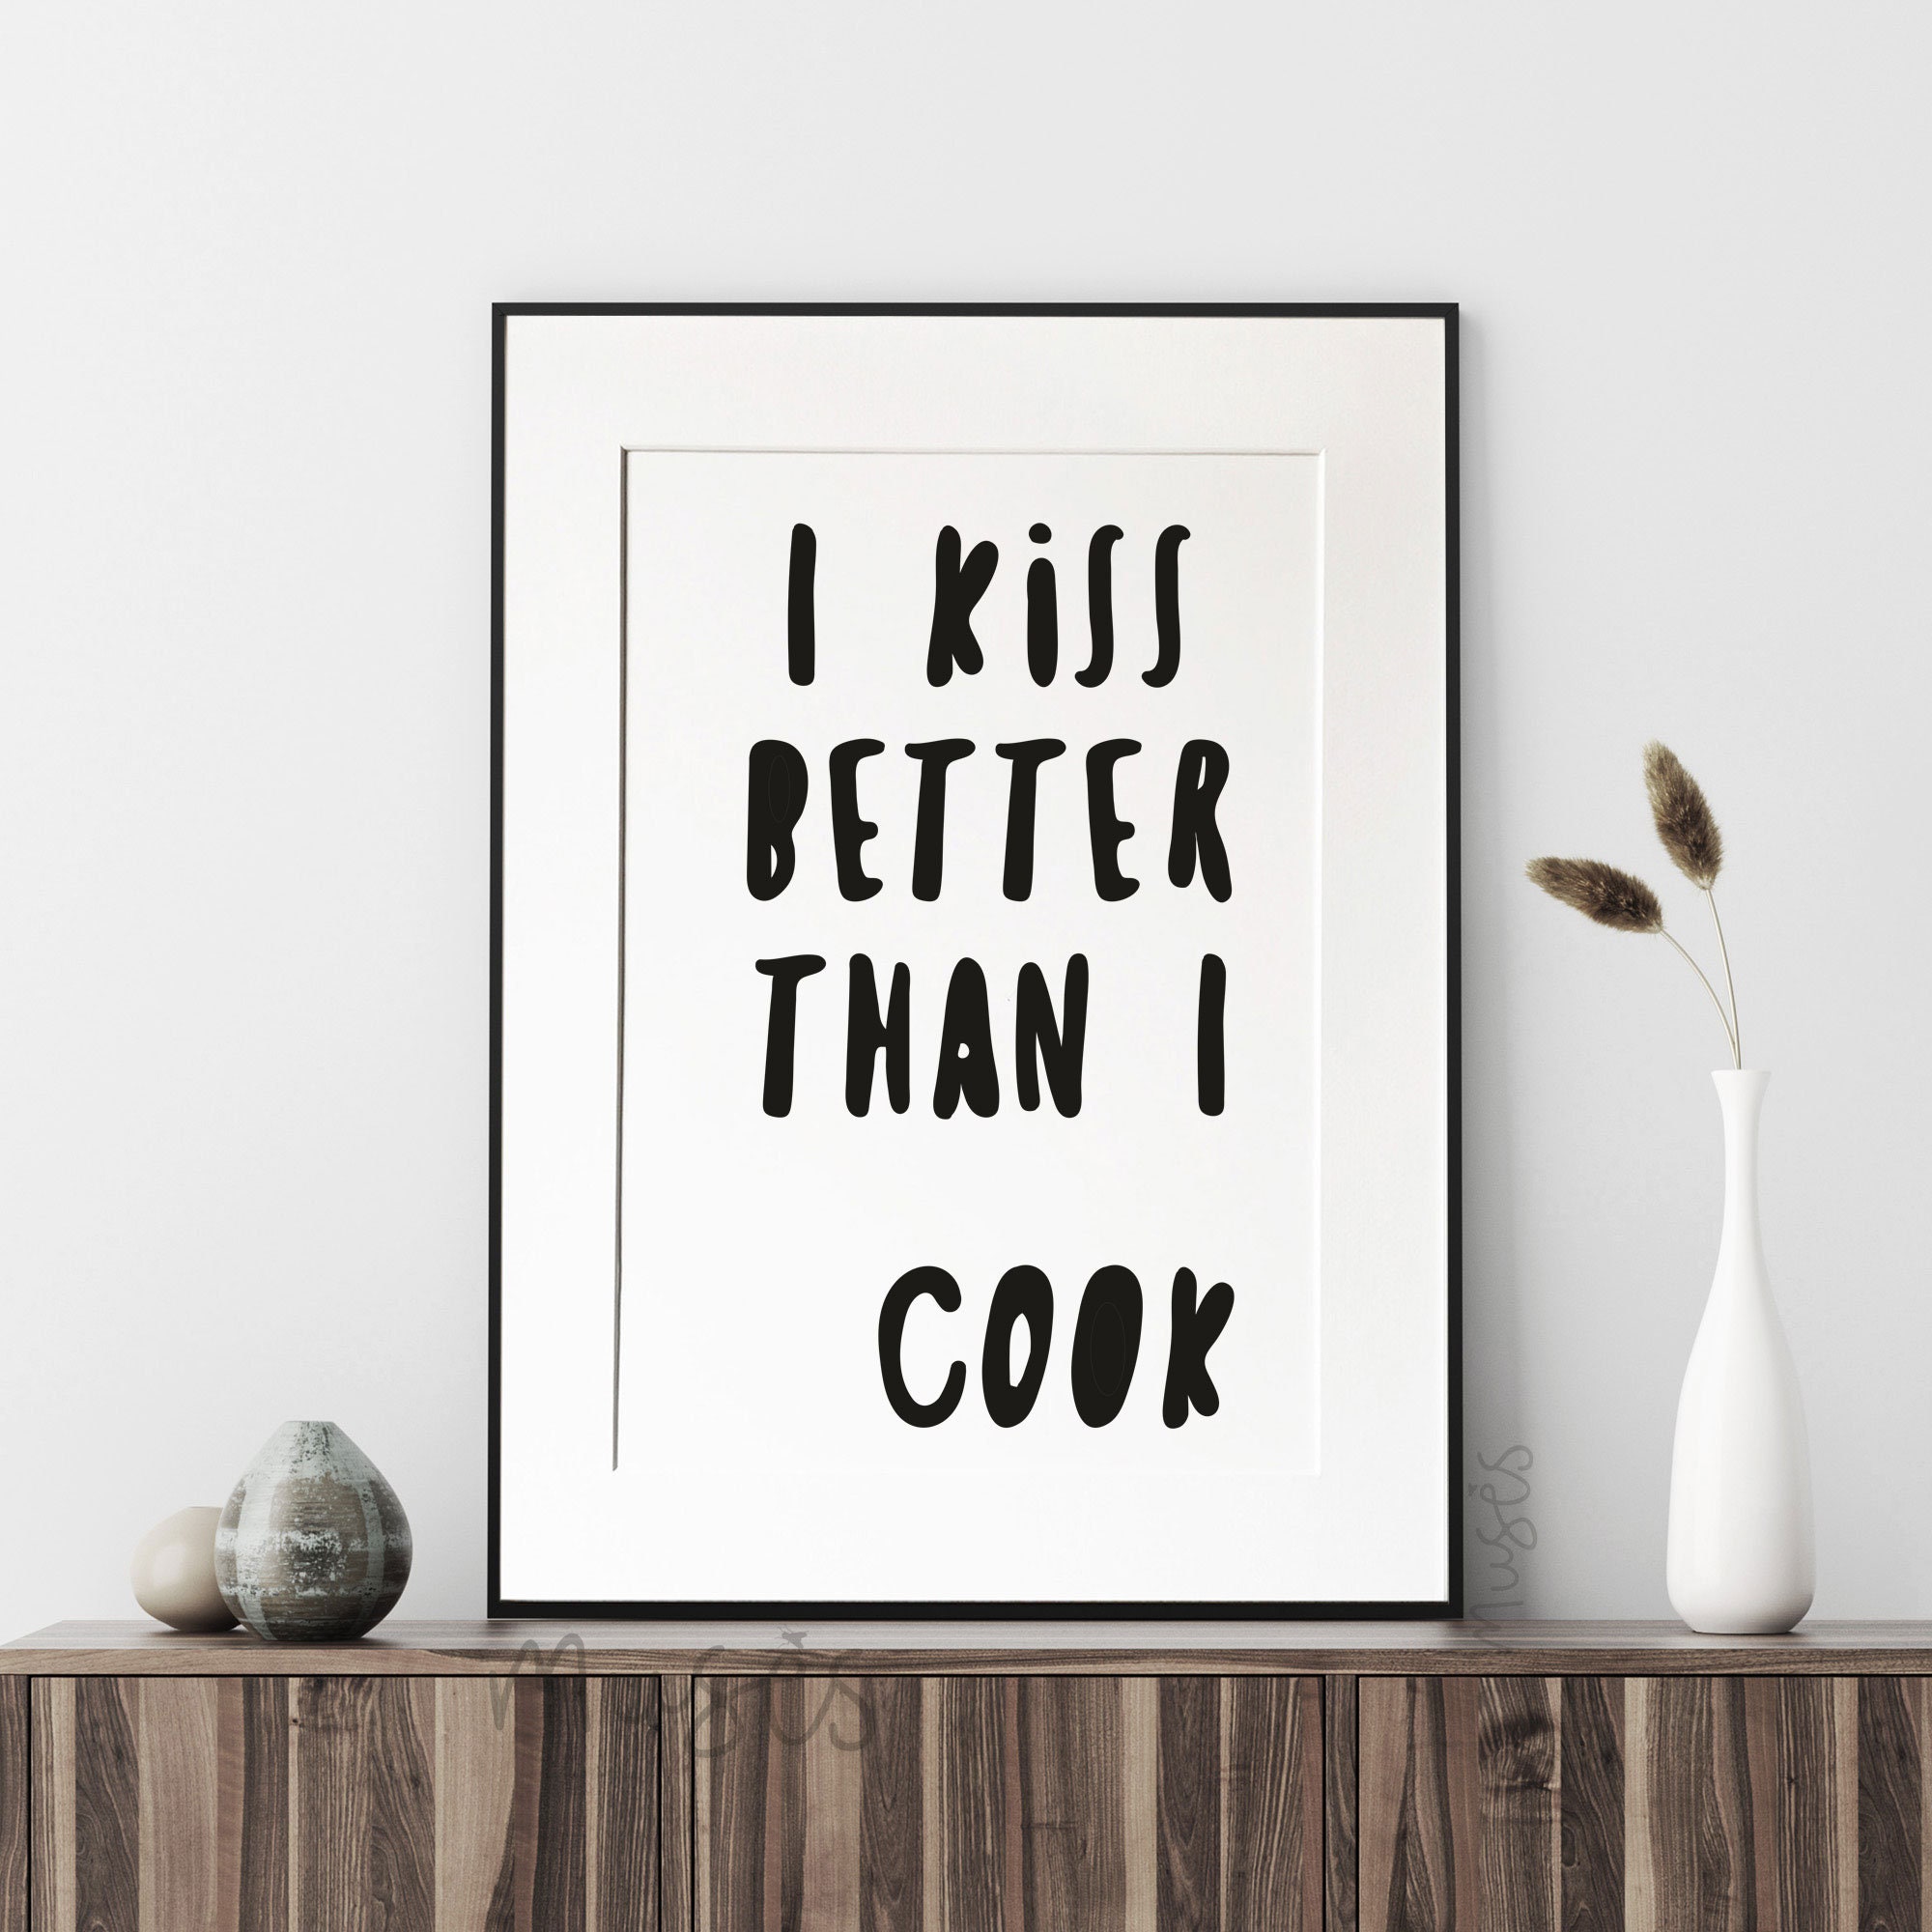 Baking Cooking Don't Make Me Custom Poster, Funny Kitchen Decor